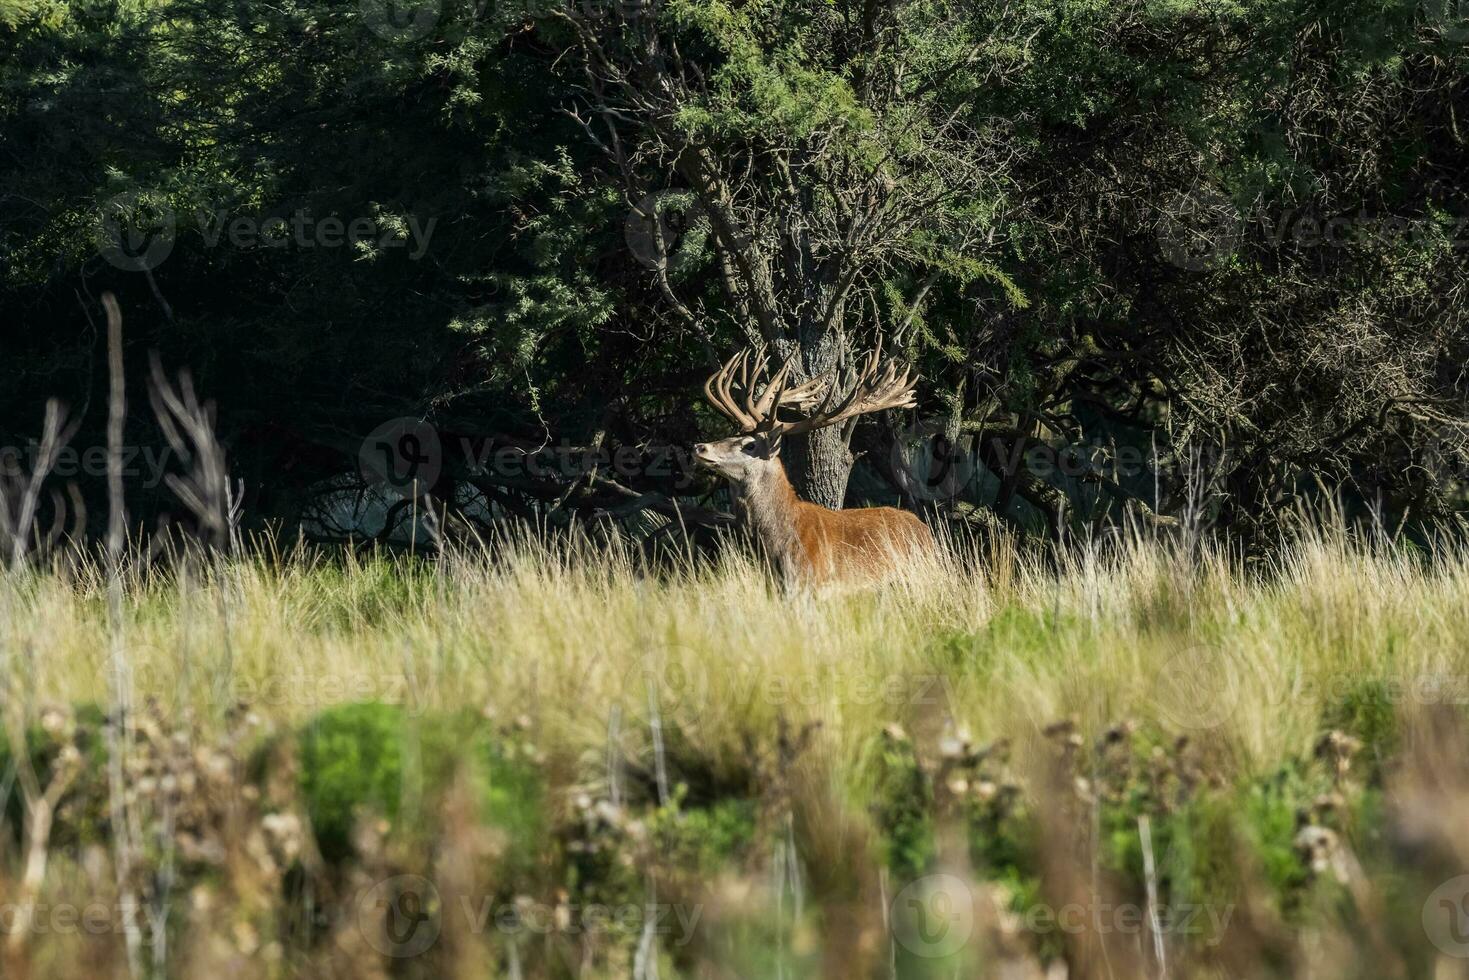 rojo ciervo, masculino rugido en la pampa, argentina, parque luro, naturaleza reserva foto